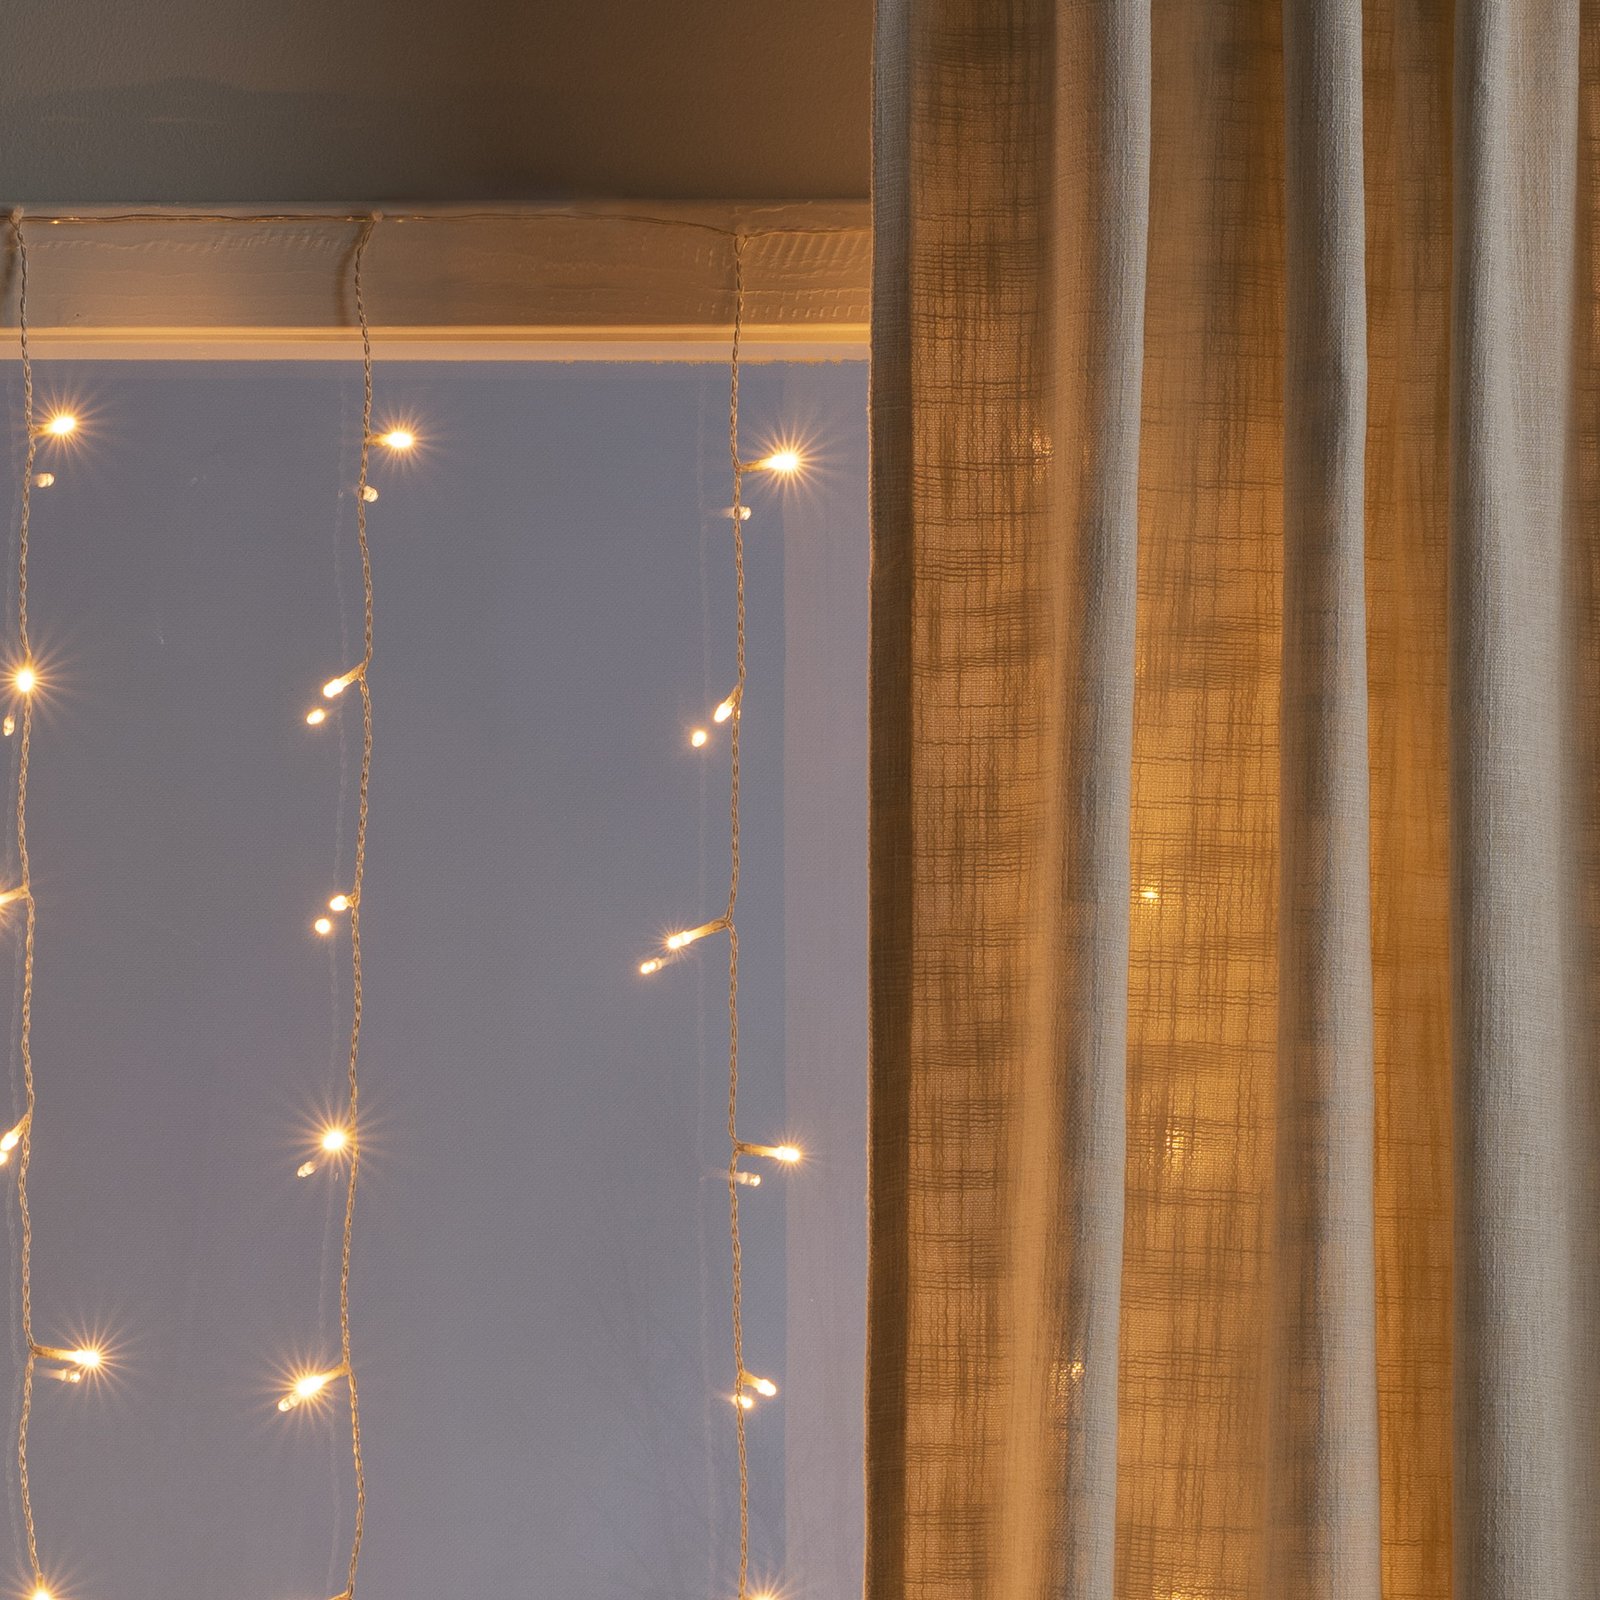 LED curtain light, 120-bulb, amber